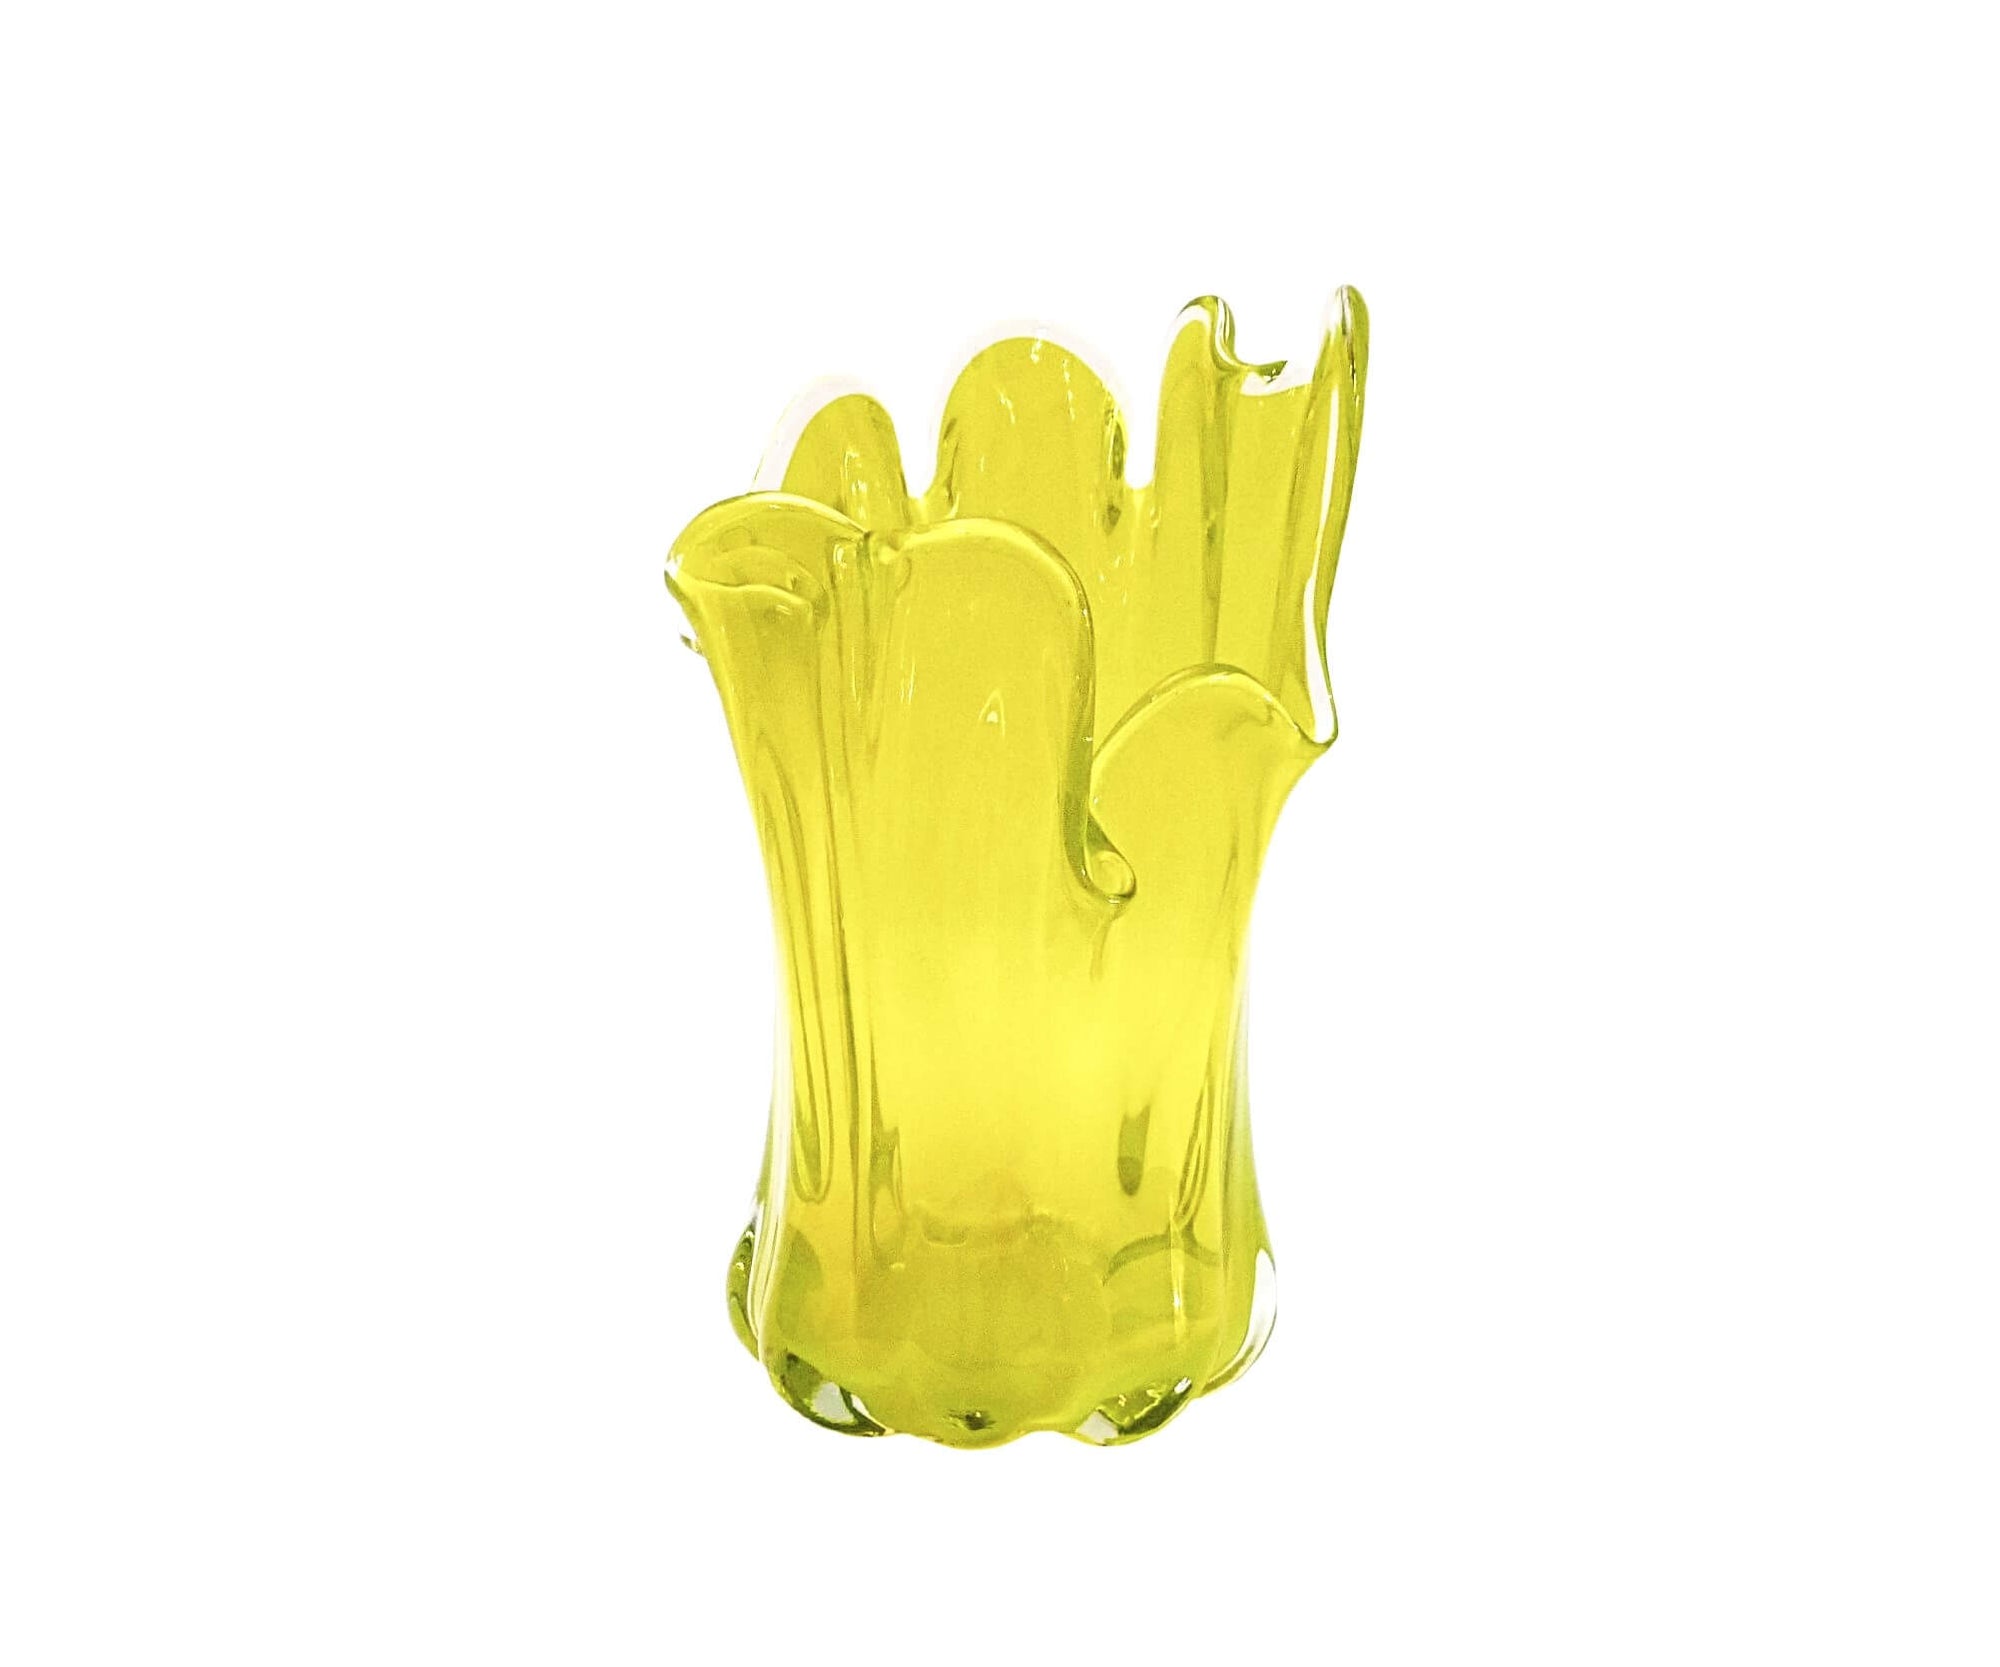 Yellow/Green Art Glass Vase, Bright Sunny Colour